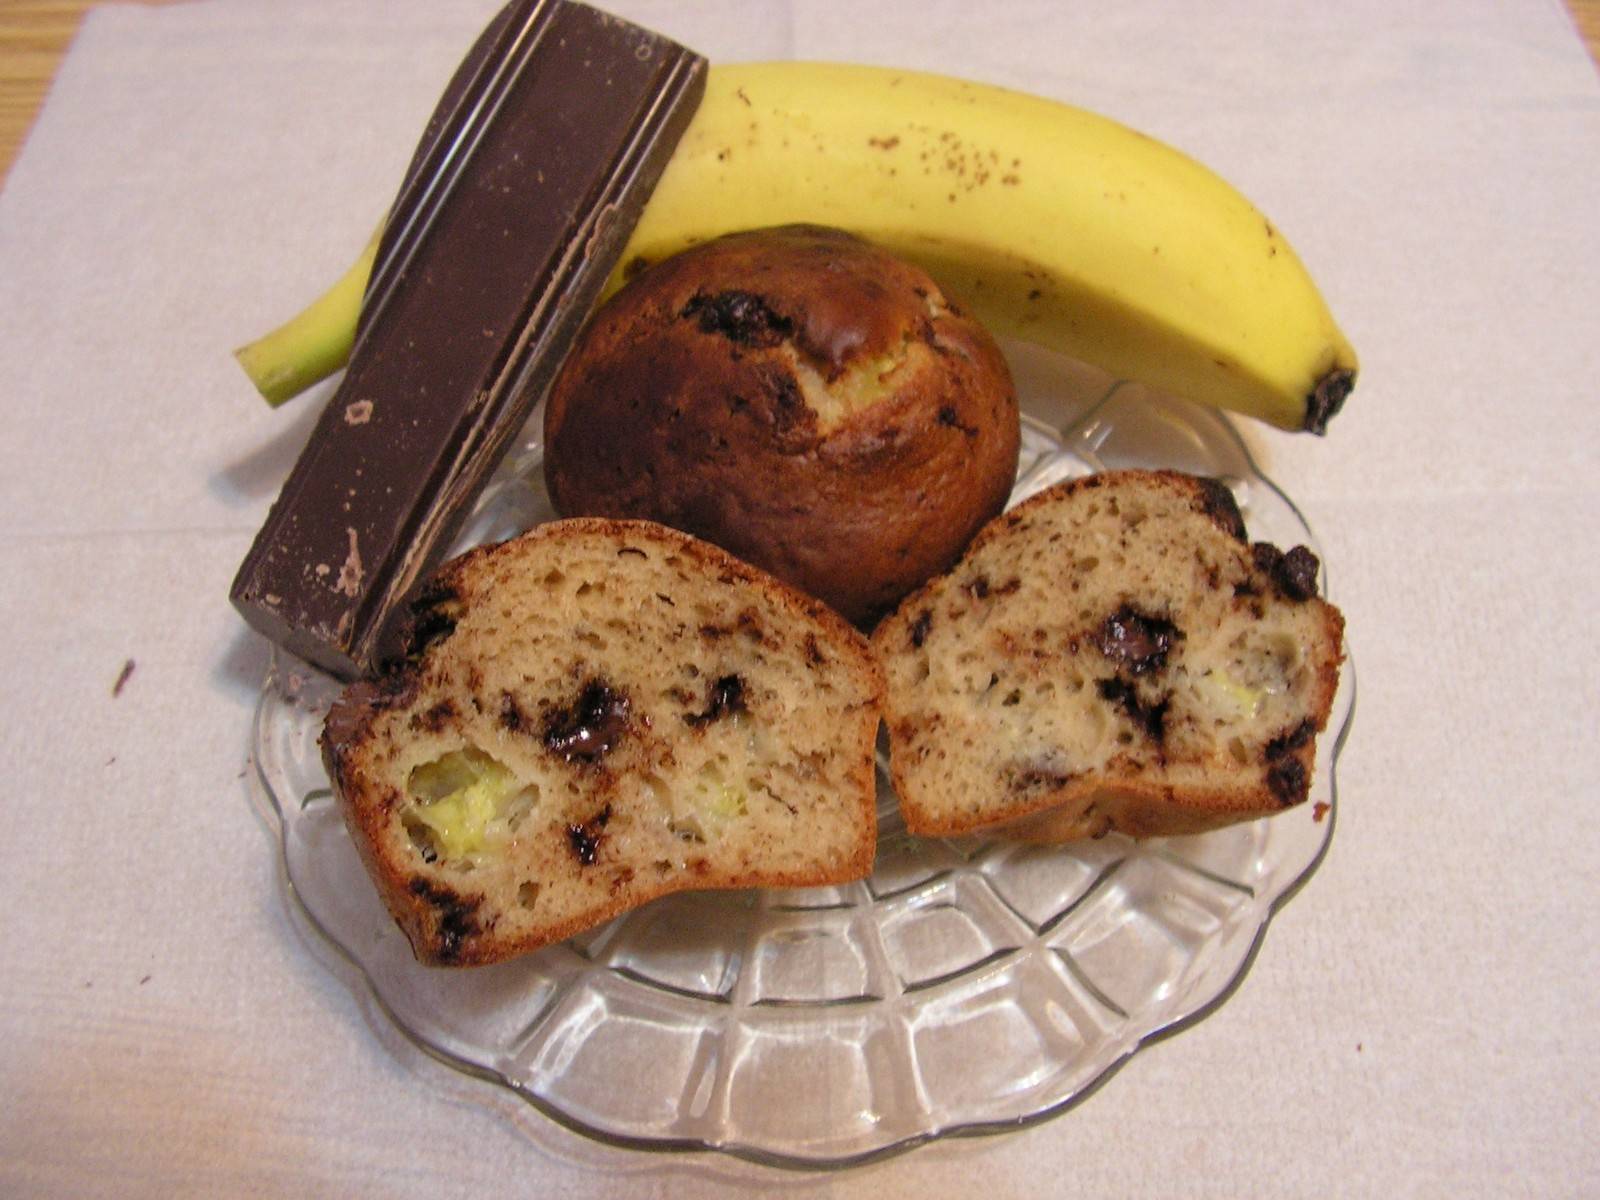 Bananen-Schoko-Muffins